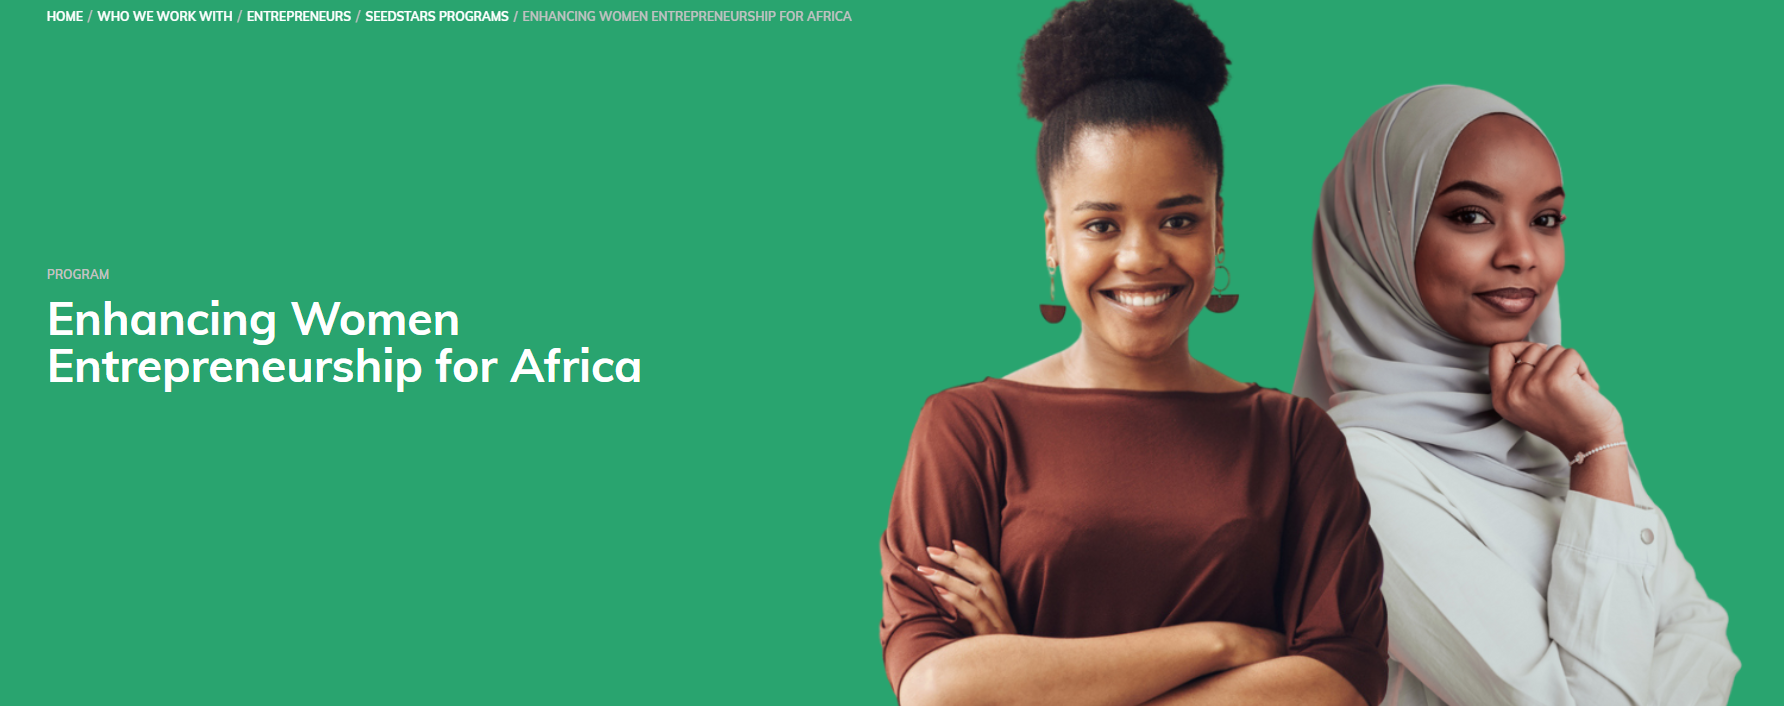 Enhancing Women Entrepreneurship in Africa (EWEA) Program for Women SMEs & Community Enablers – Call for Applications